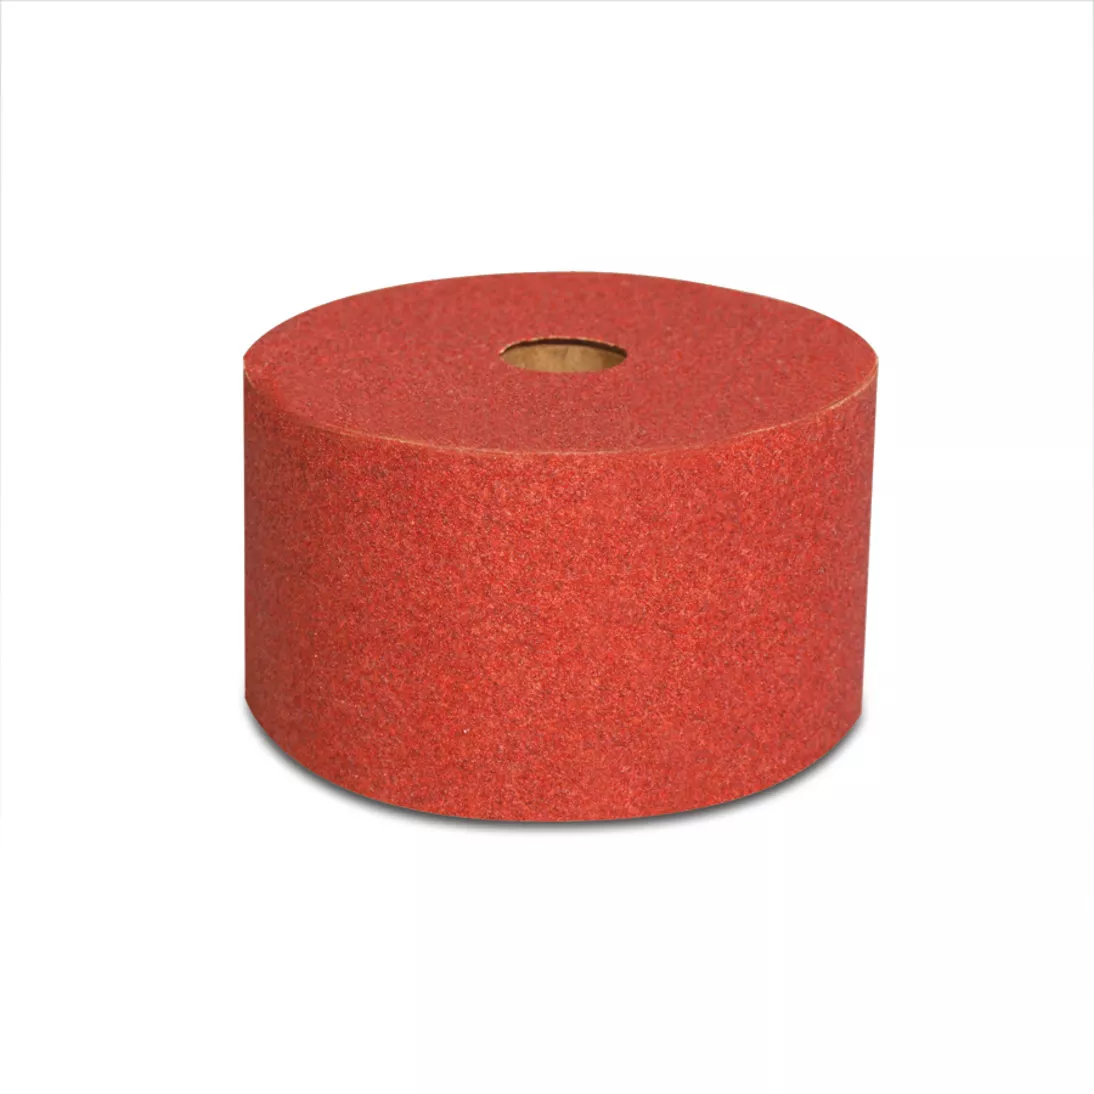 3M™ Red Abrasive Stikit™ Sheet Roll, 01682, P320, 2-3/4 in x 25 yd, 6
rolls per case